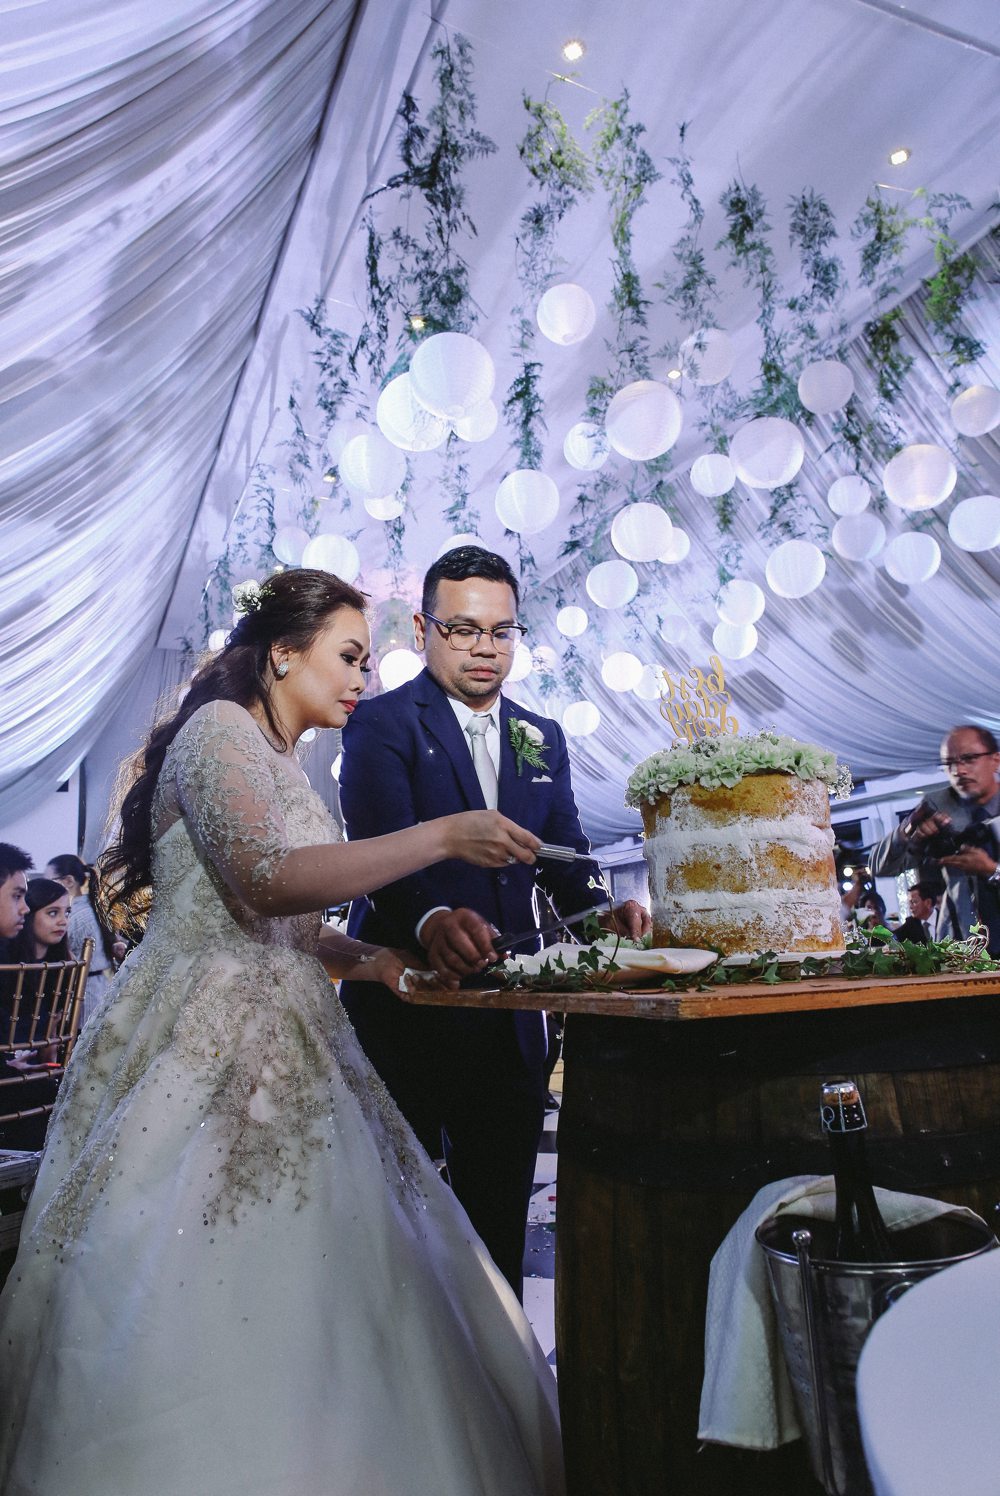 Dennis and Jeszel Hillcreek Tagaytay Wedding Photography by Jayson and Joanne Arquiza